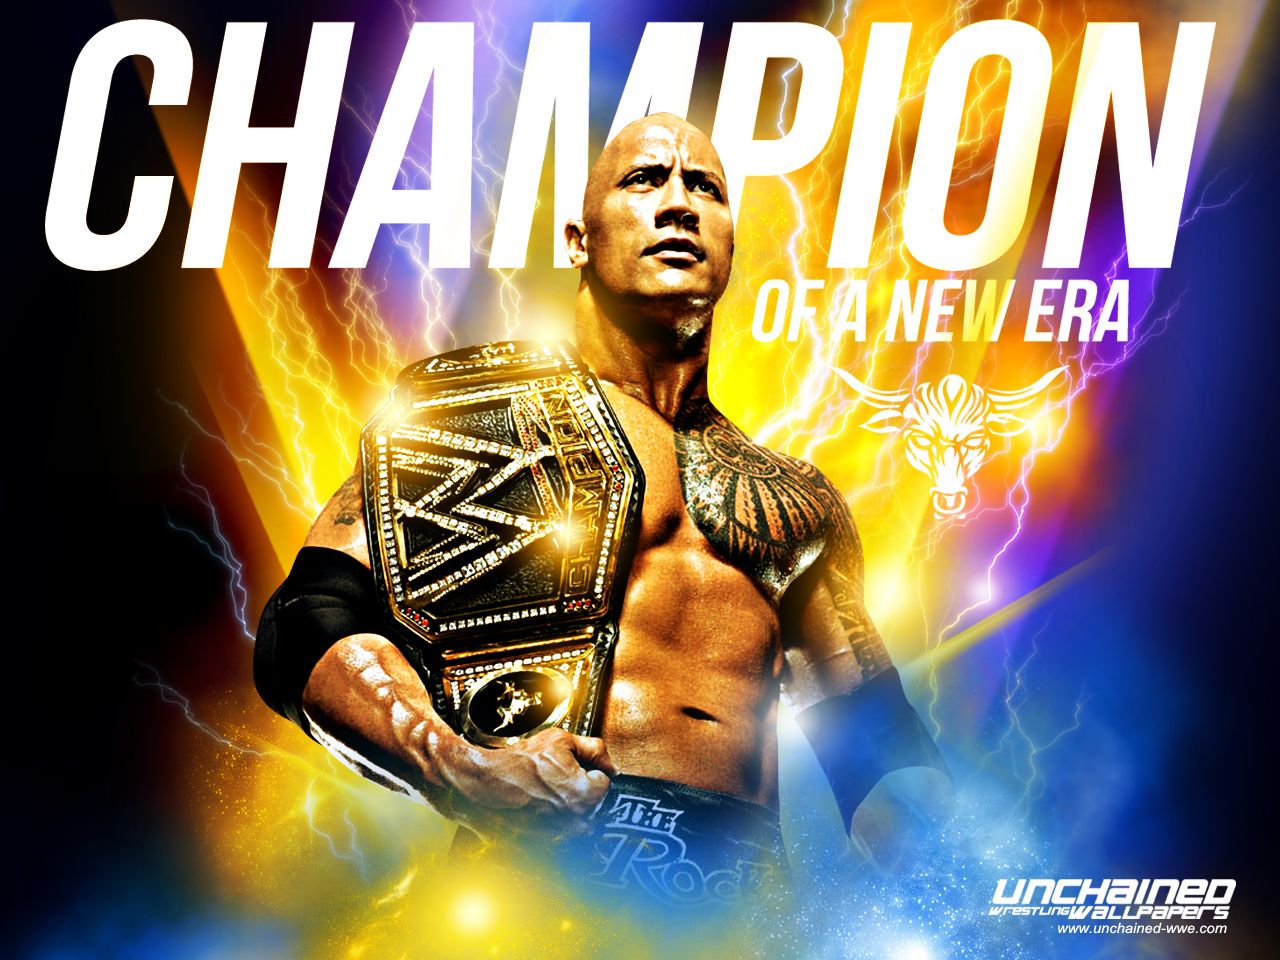 The Rock - Champion of a new Era - WWE Wallpaper 33707028 - Fanpop